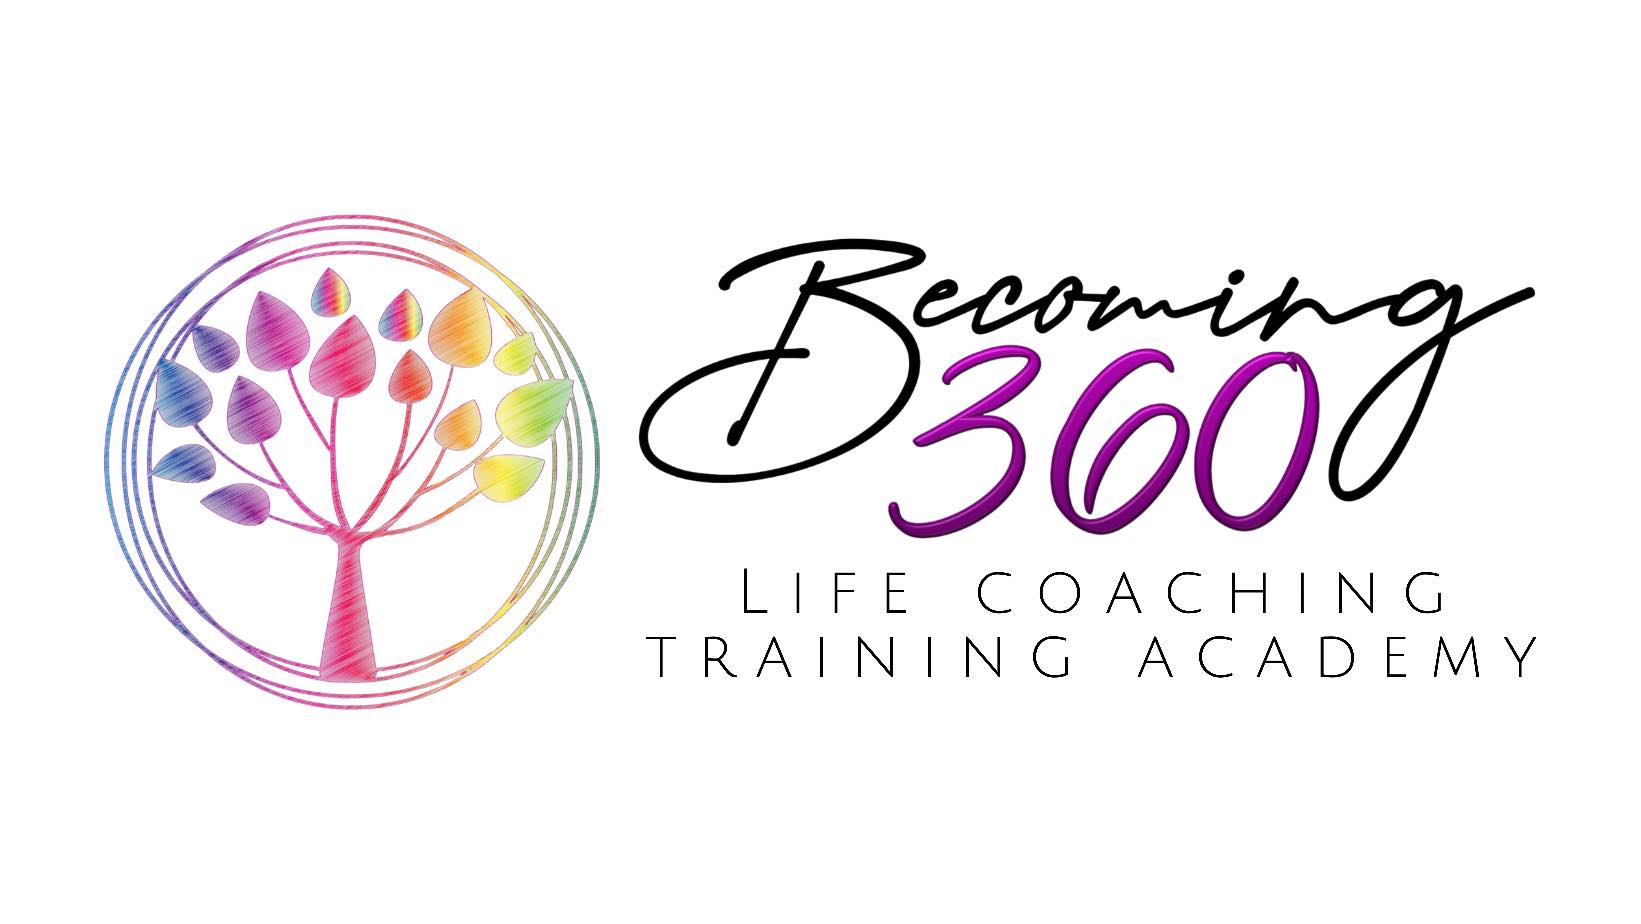 Becoming 360 Life Coaching Training Academy logo